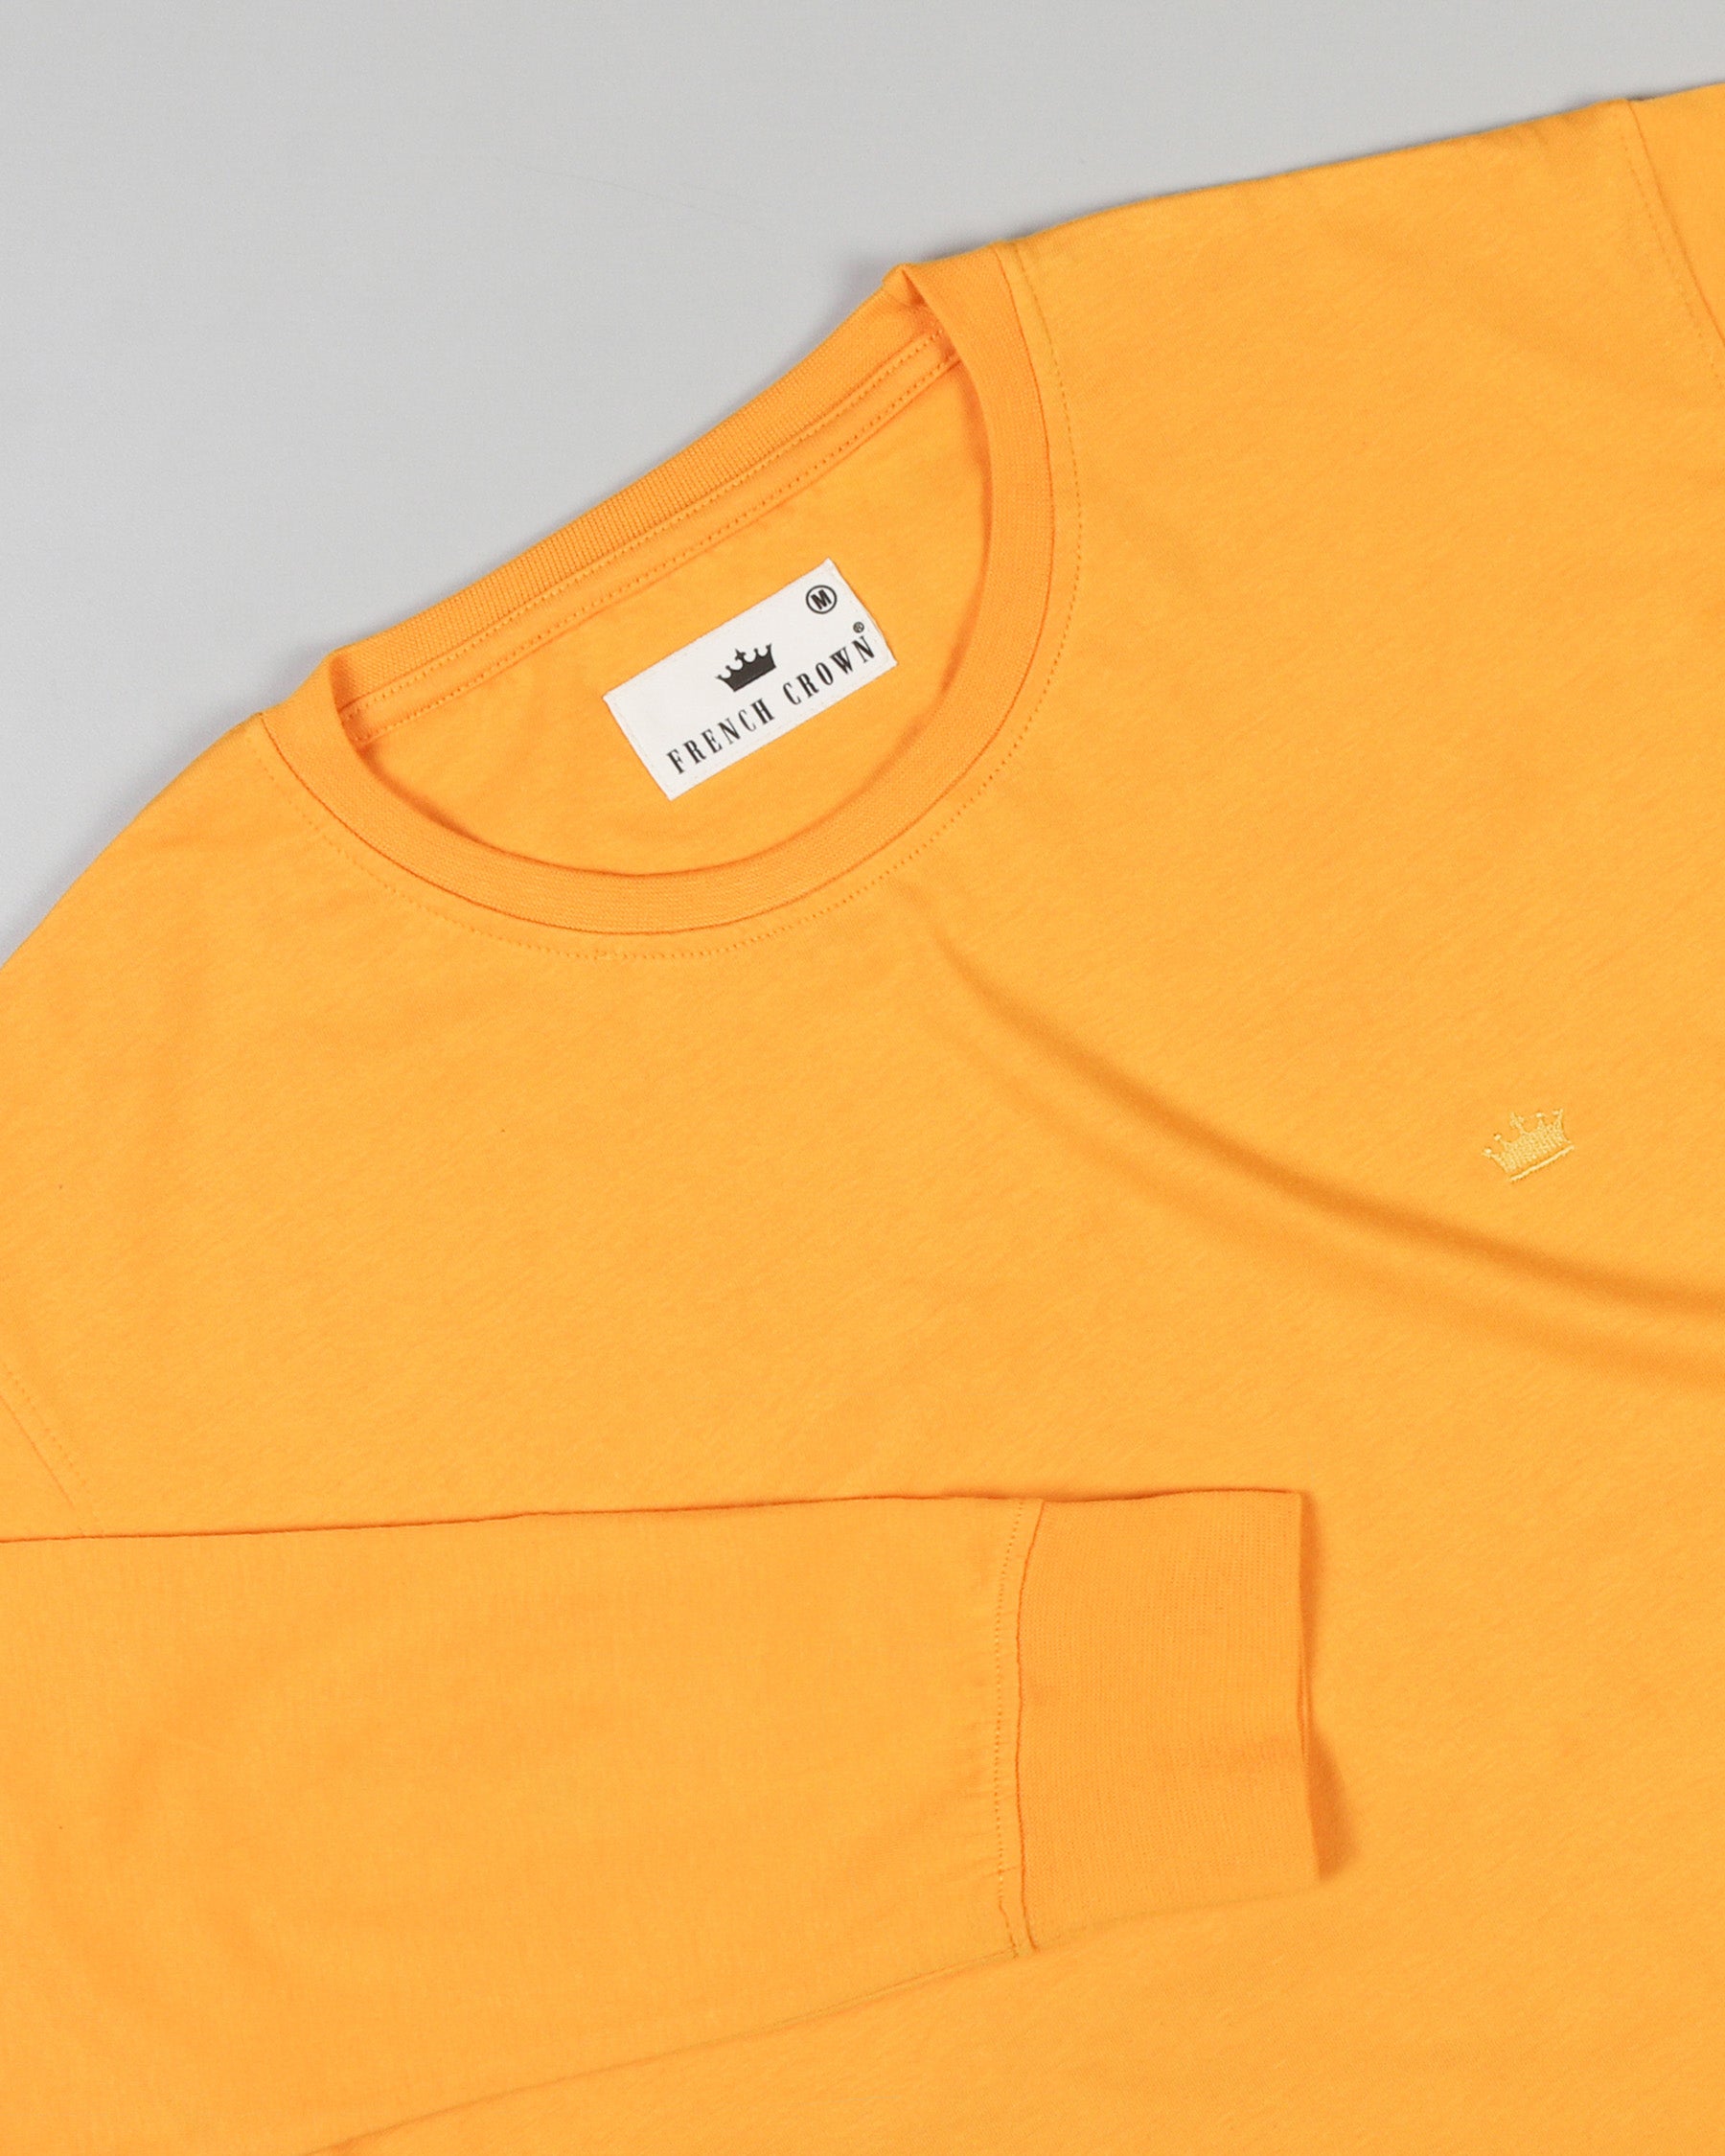 Bright Orange Super Soft Premium Cotton Full Sleeve Organic Cotton Brushed Sweatshirt TS163-M, TS163-S, TS163-L, TS163-XL, TS163-XXL